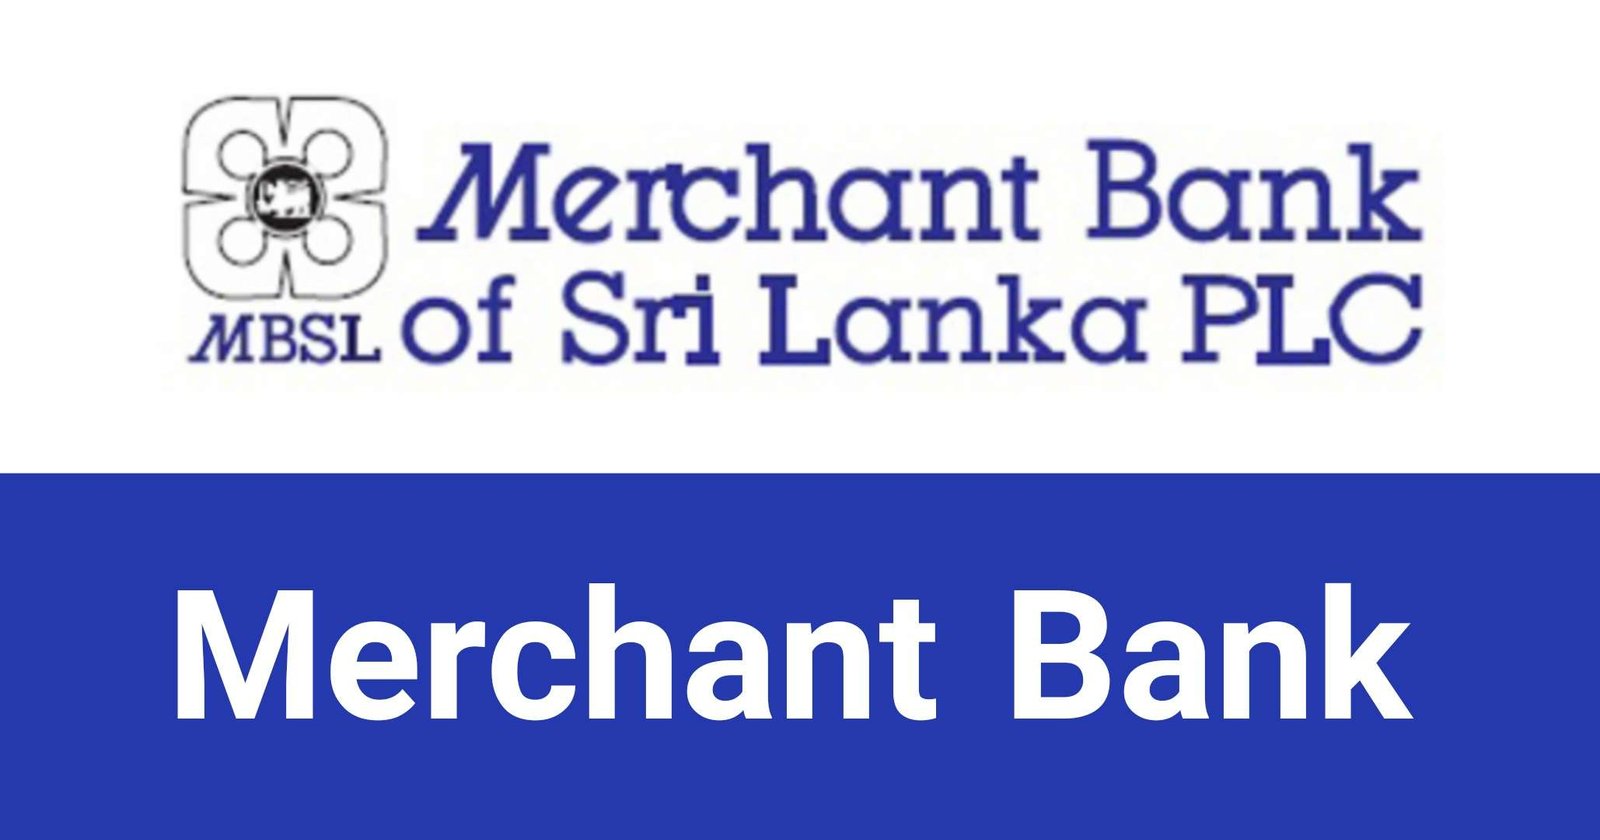 Merchant Bank of Sri Lanka & Finance PLC Jobs Vacancies Recruitments